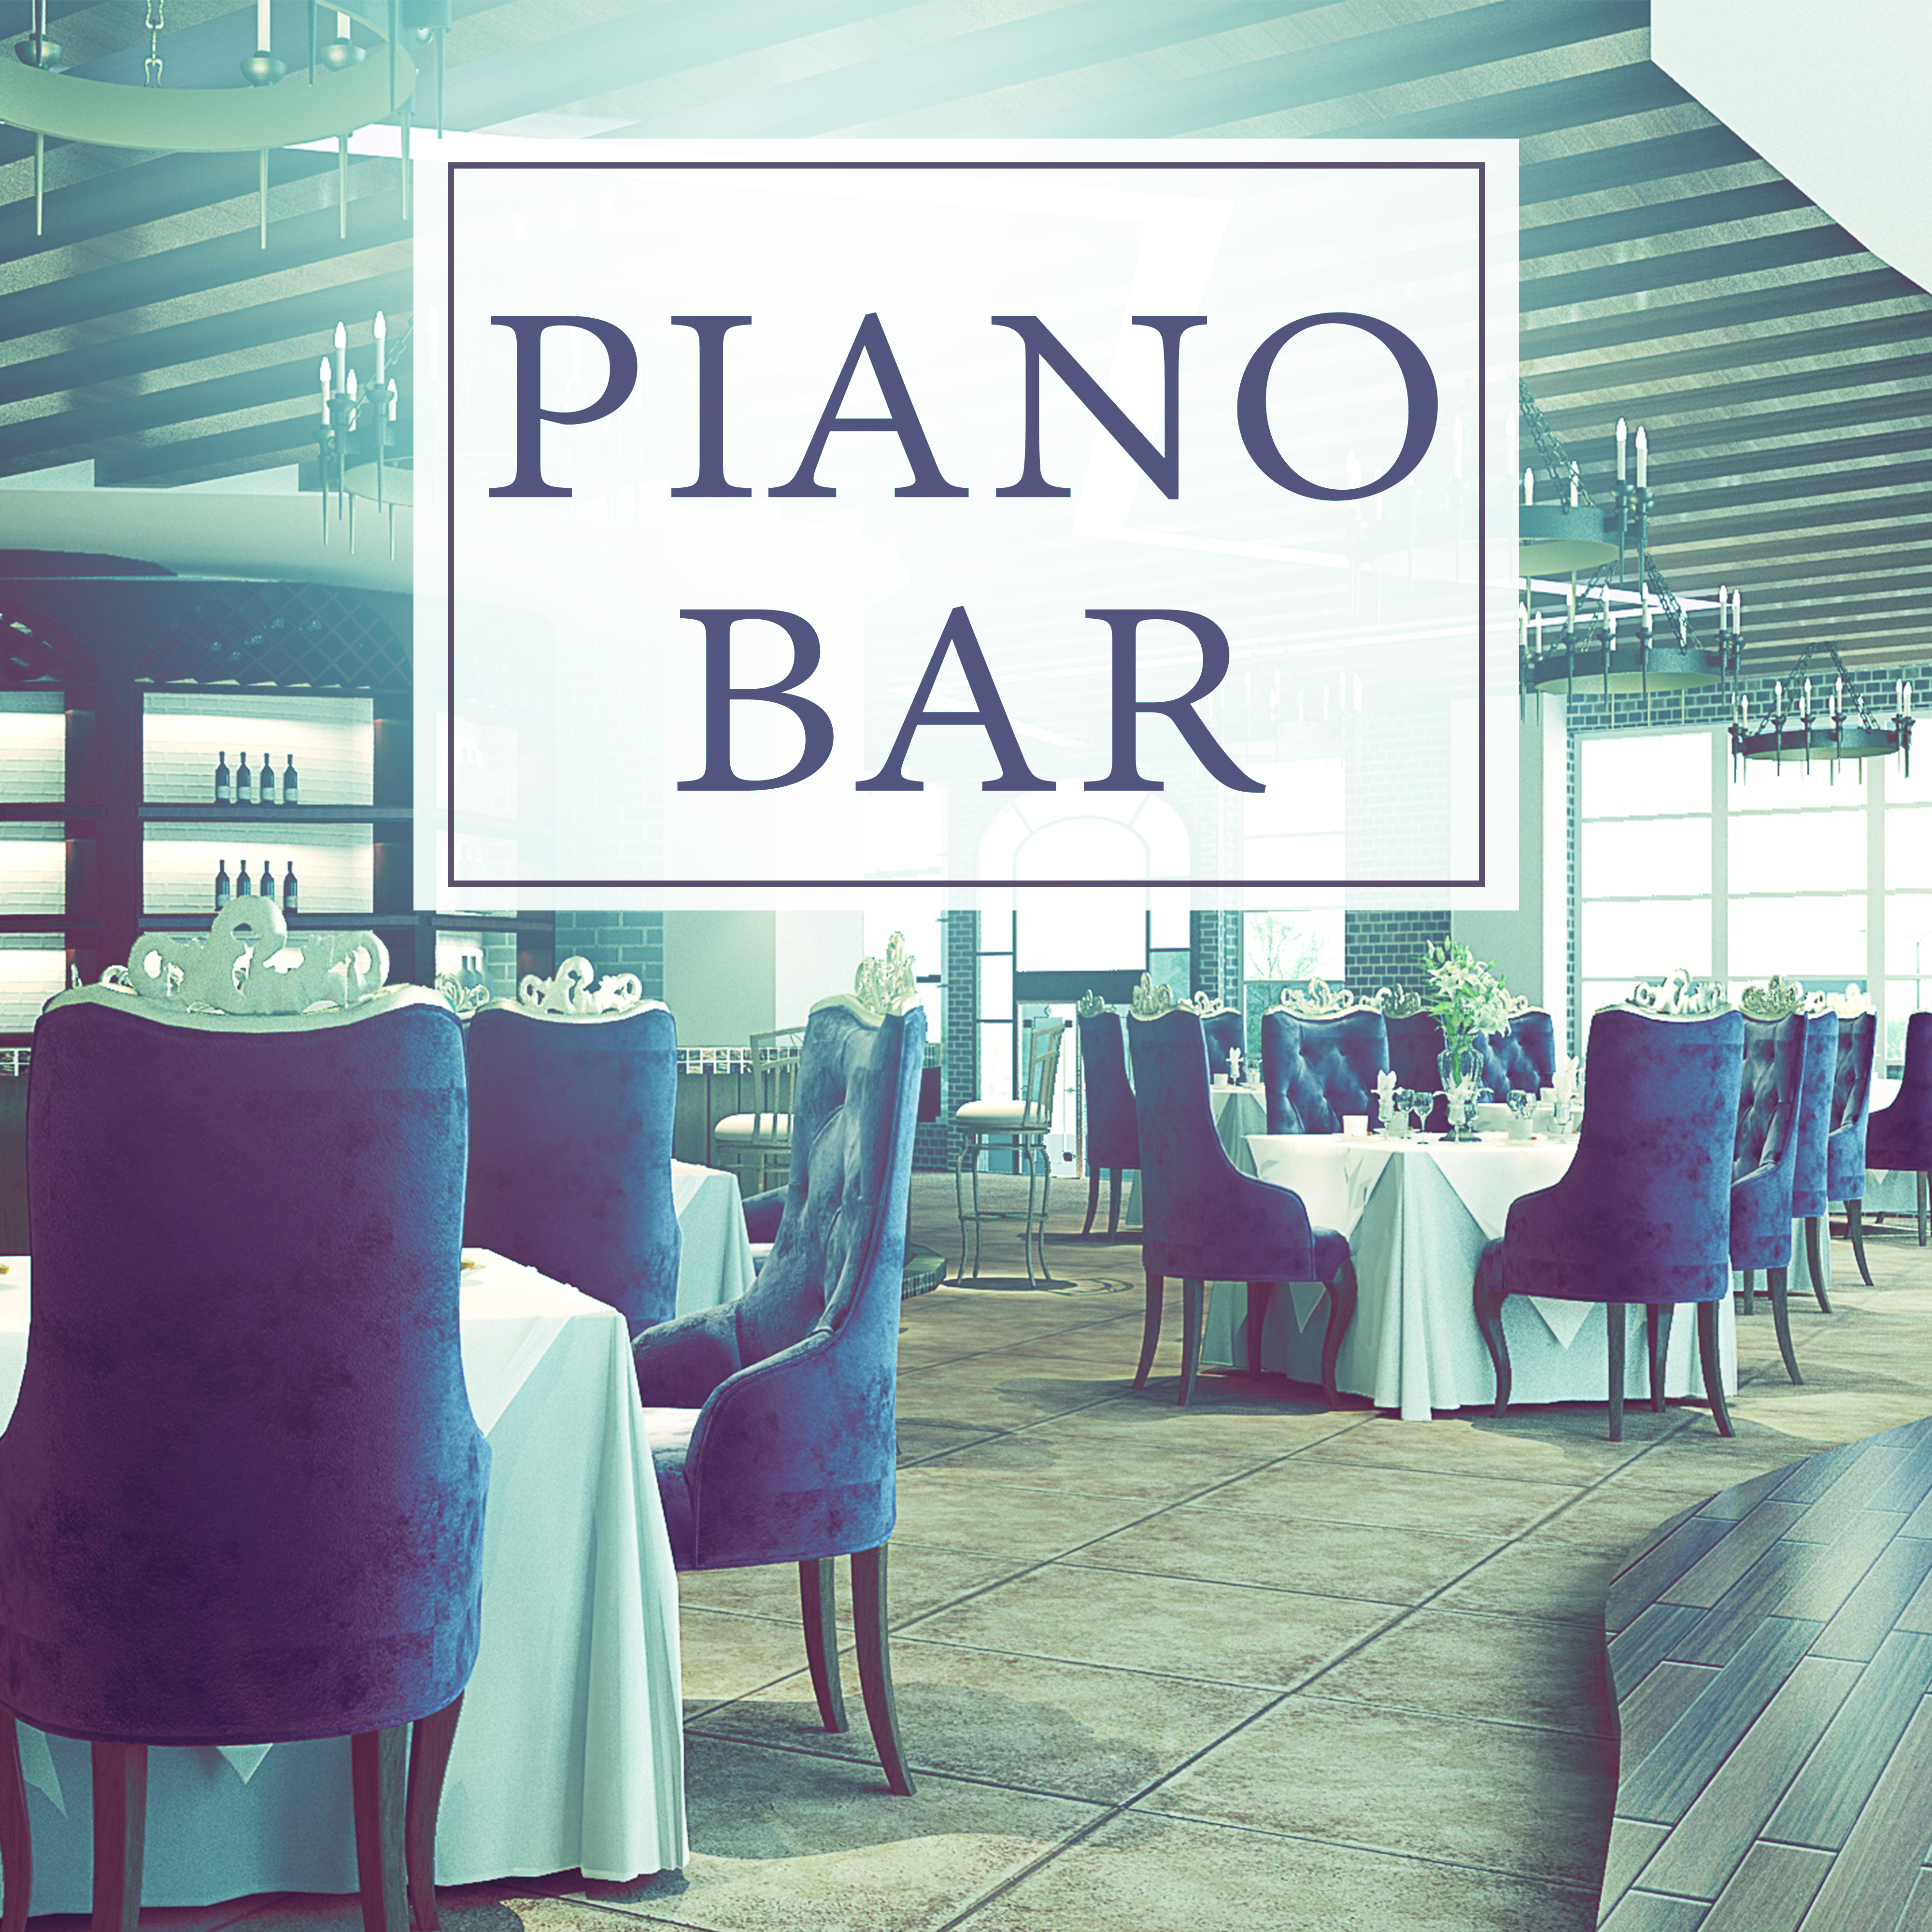 Piano Bar  Smooth Jazz Rhytms, Instrumental Jazz Music, Ambient Jazz Club  Bar, Jazz Bistro Bar, Restaurant Music, Relaxation Music